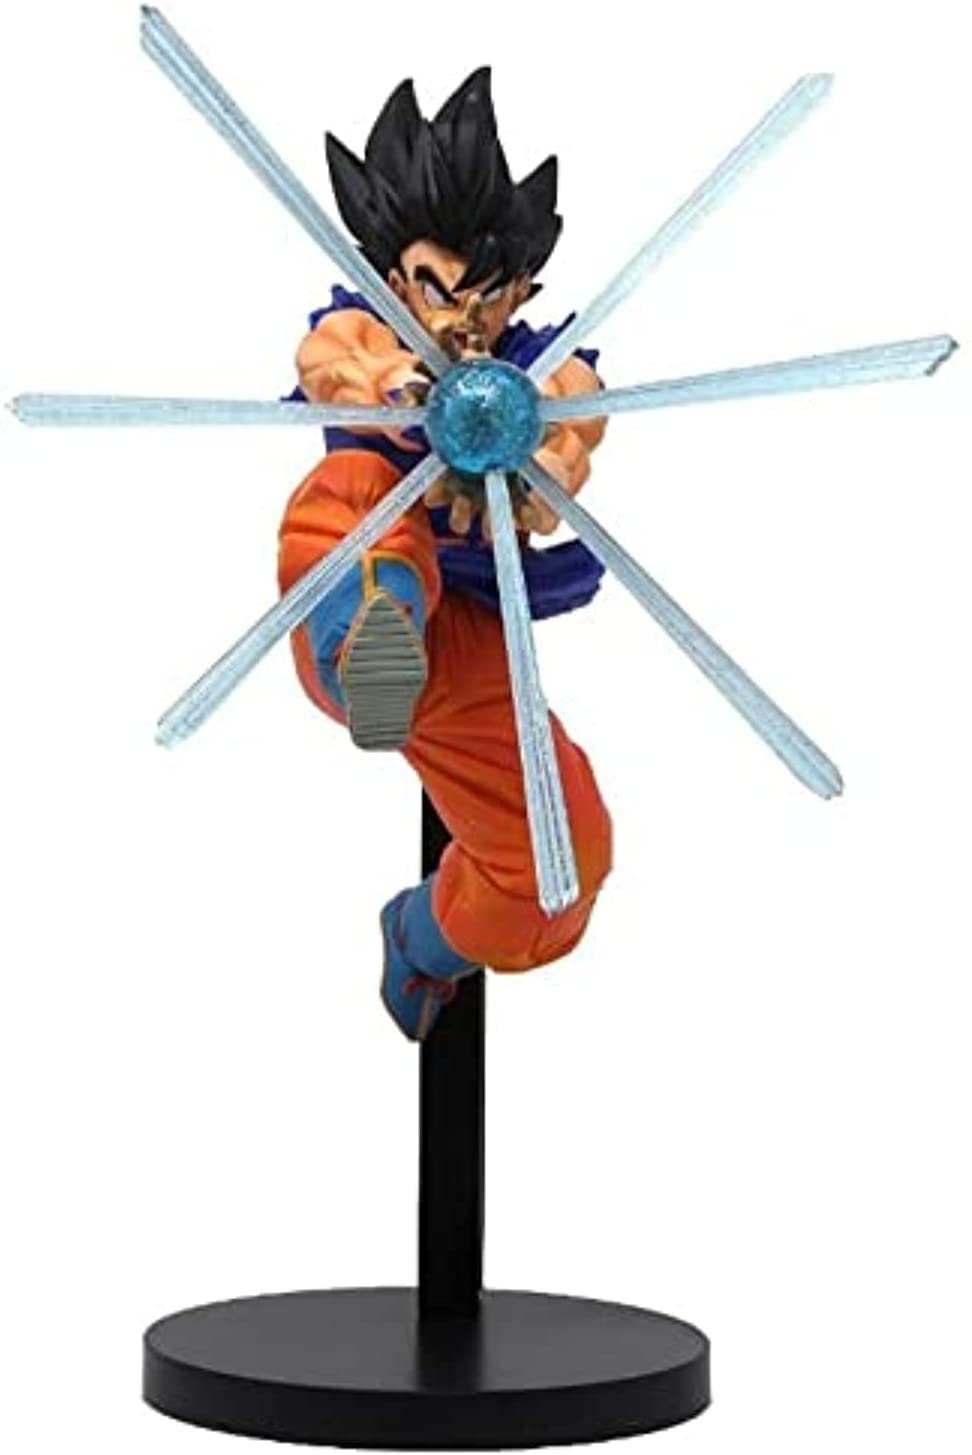 Banpresto DRAGON BALL Z - The Son Goku - Figurine G x materia 15cm